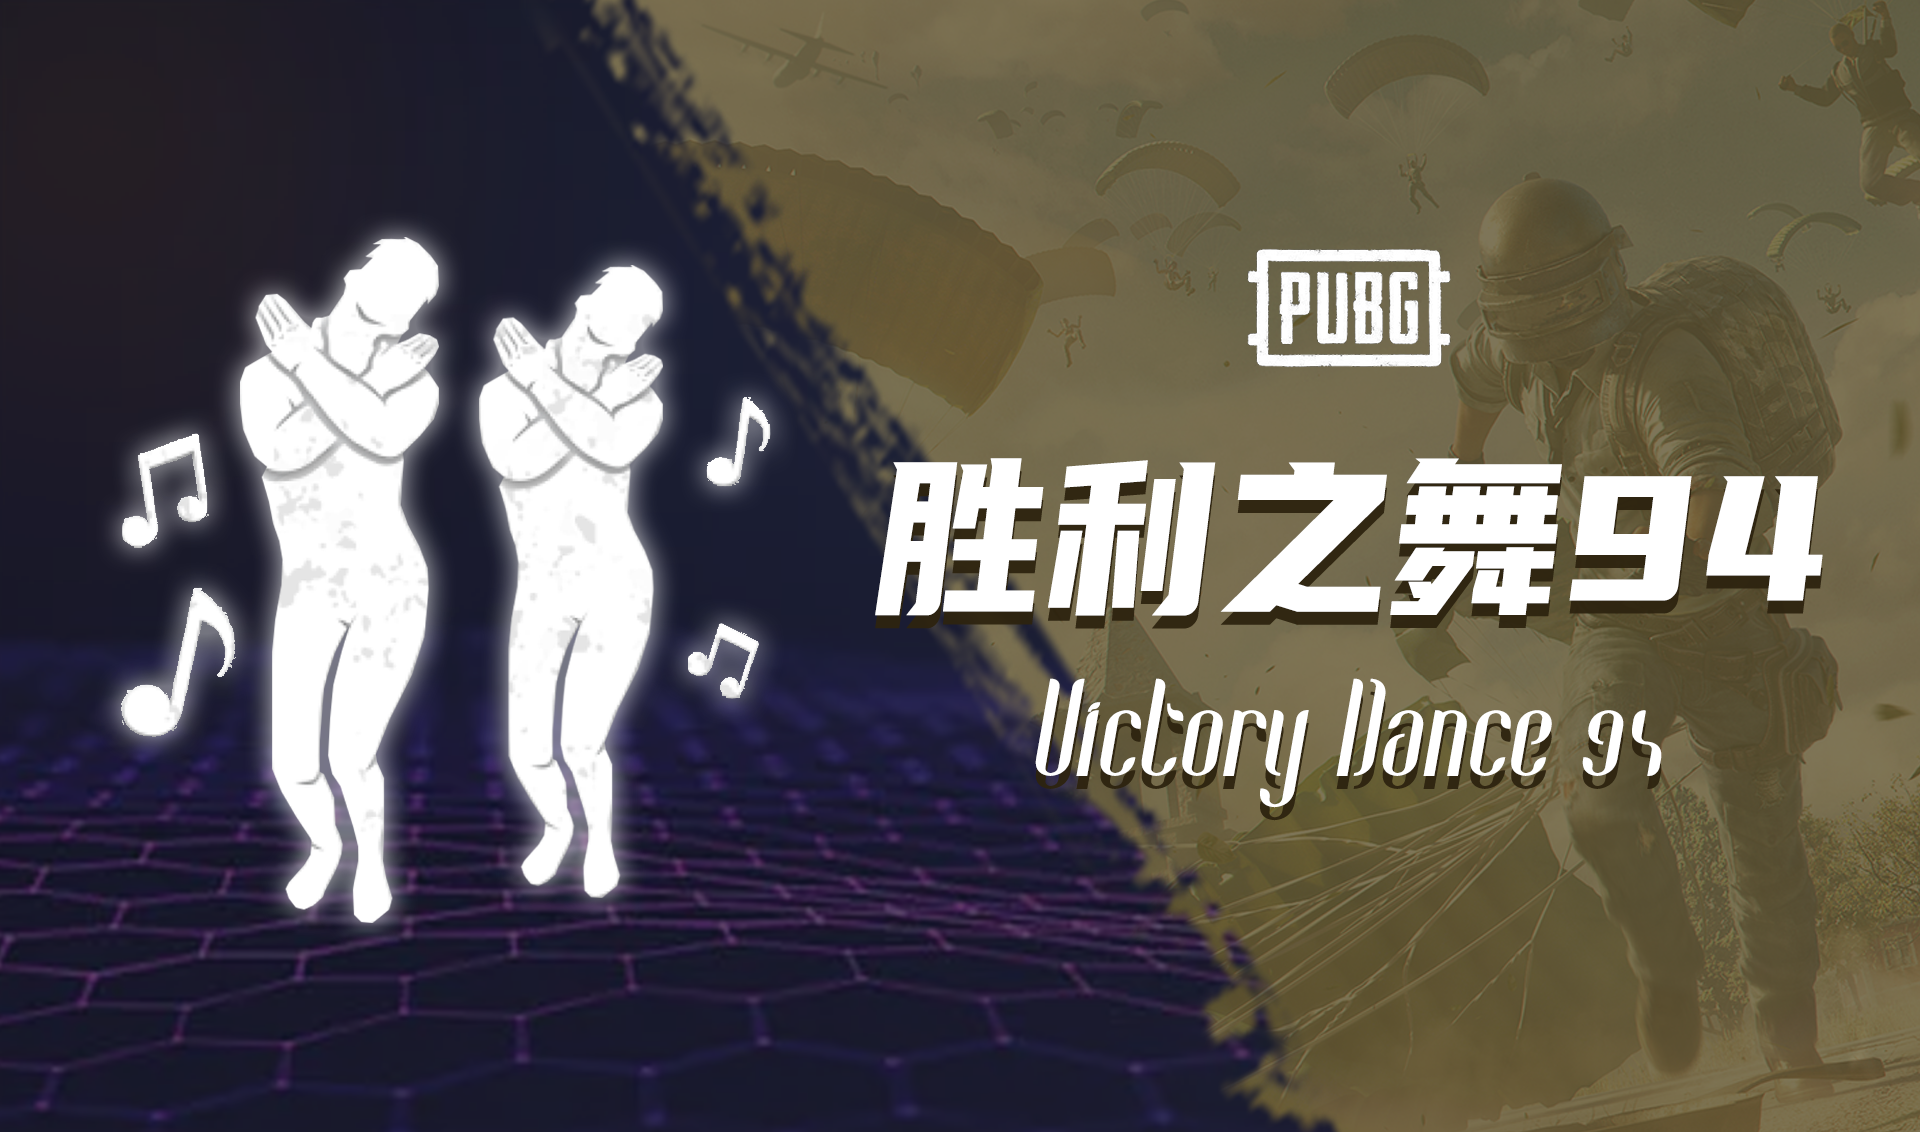 PUBG 胜利之舞94 Victory Dance 94